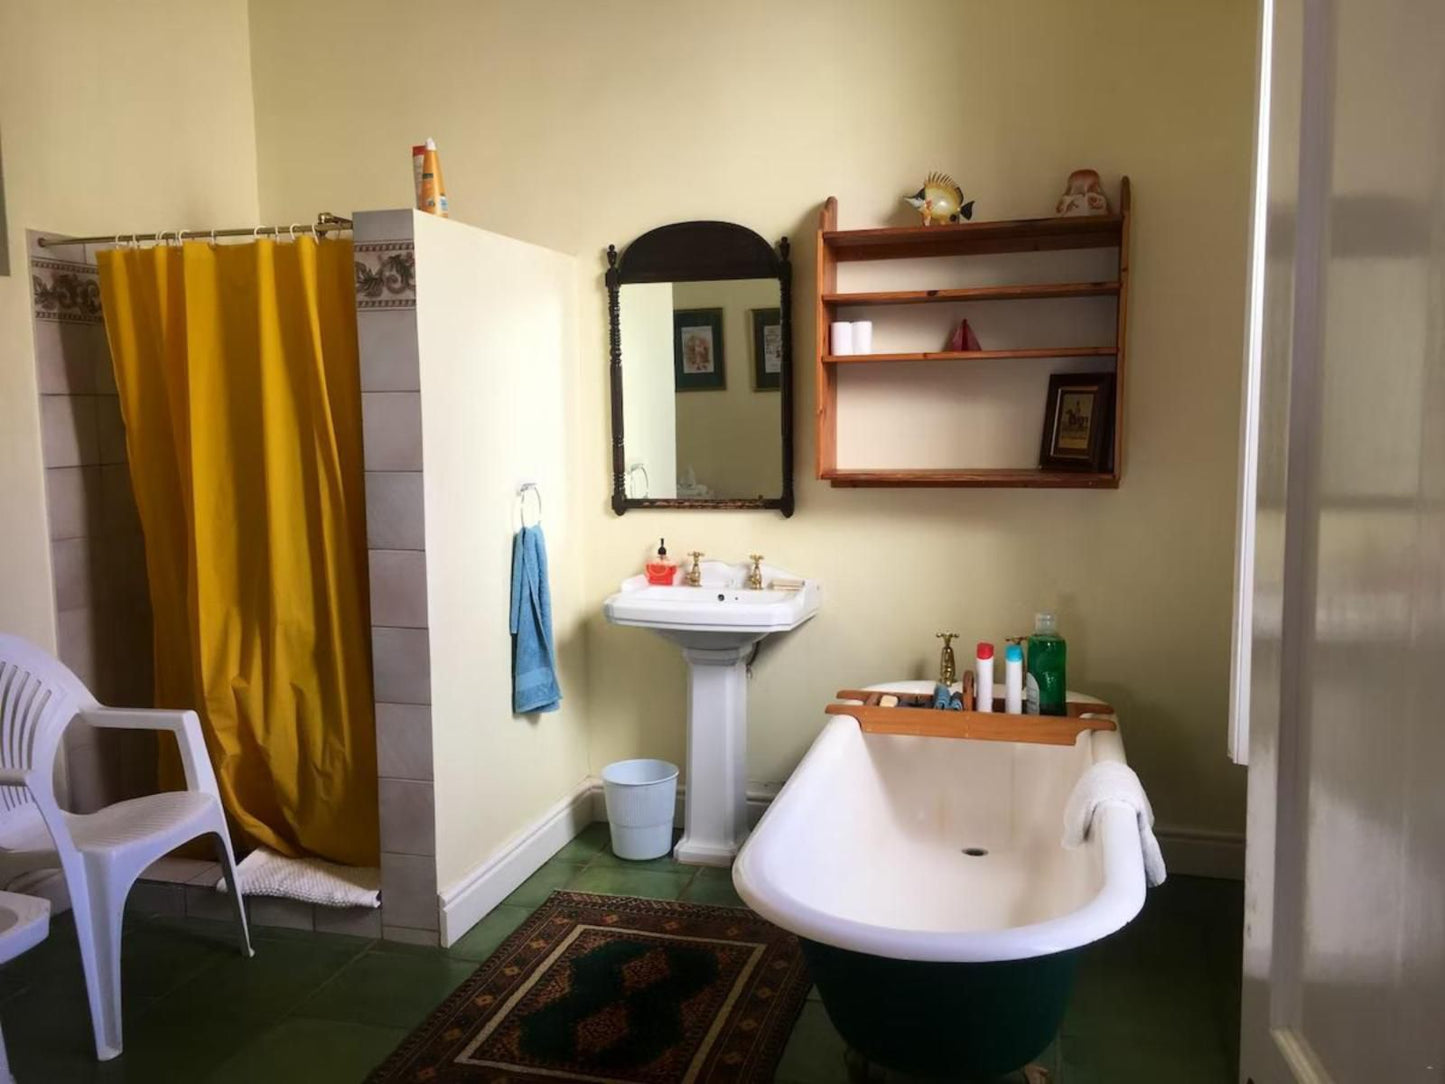 Moreson Manor Riebeek Kasteel Western Cape South Africa Bathroom